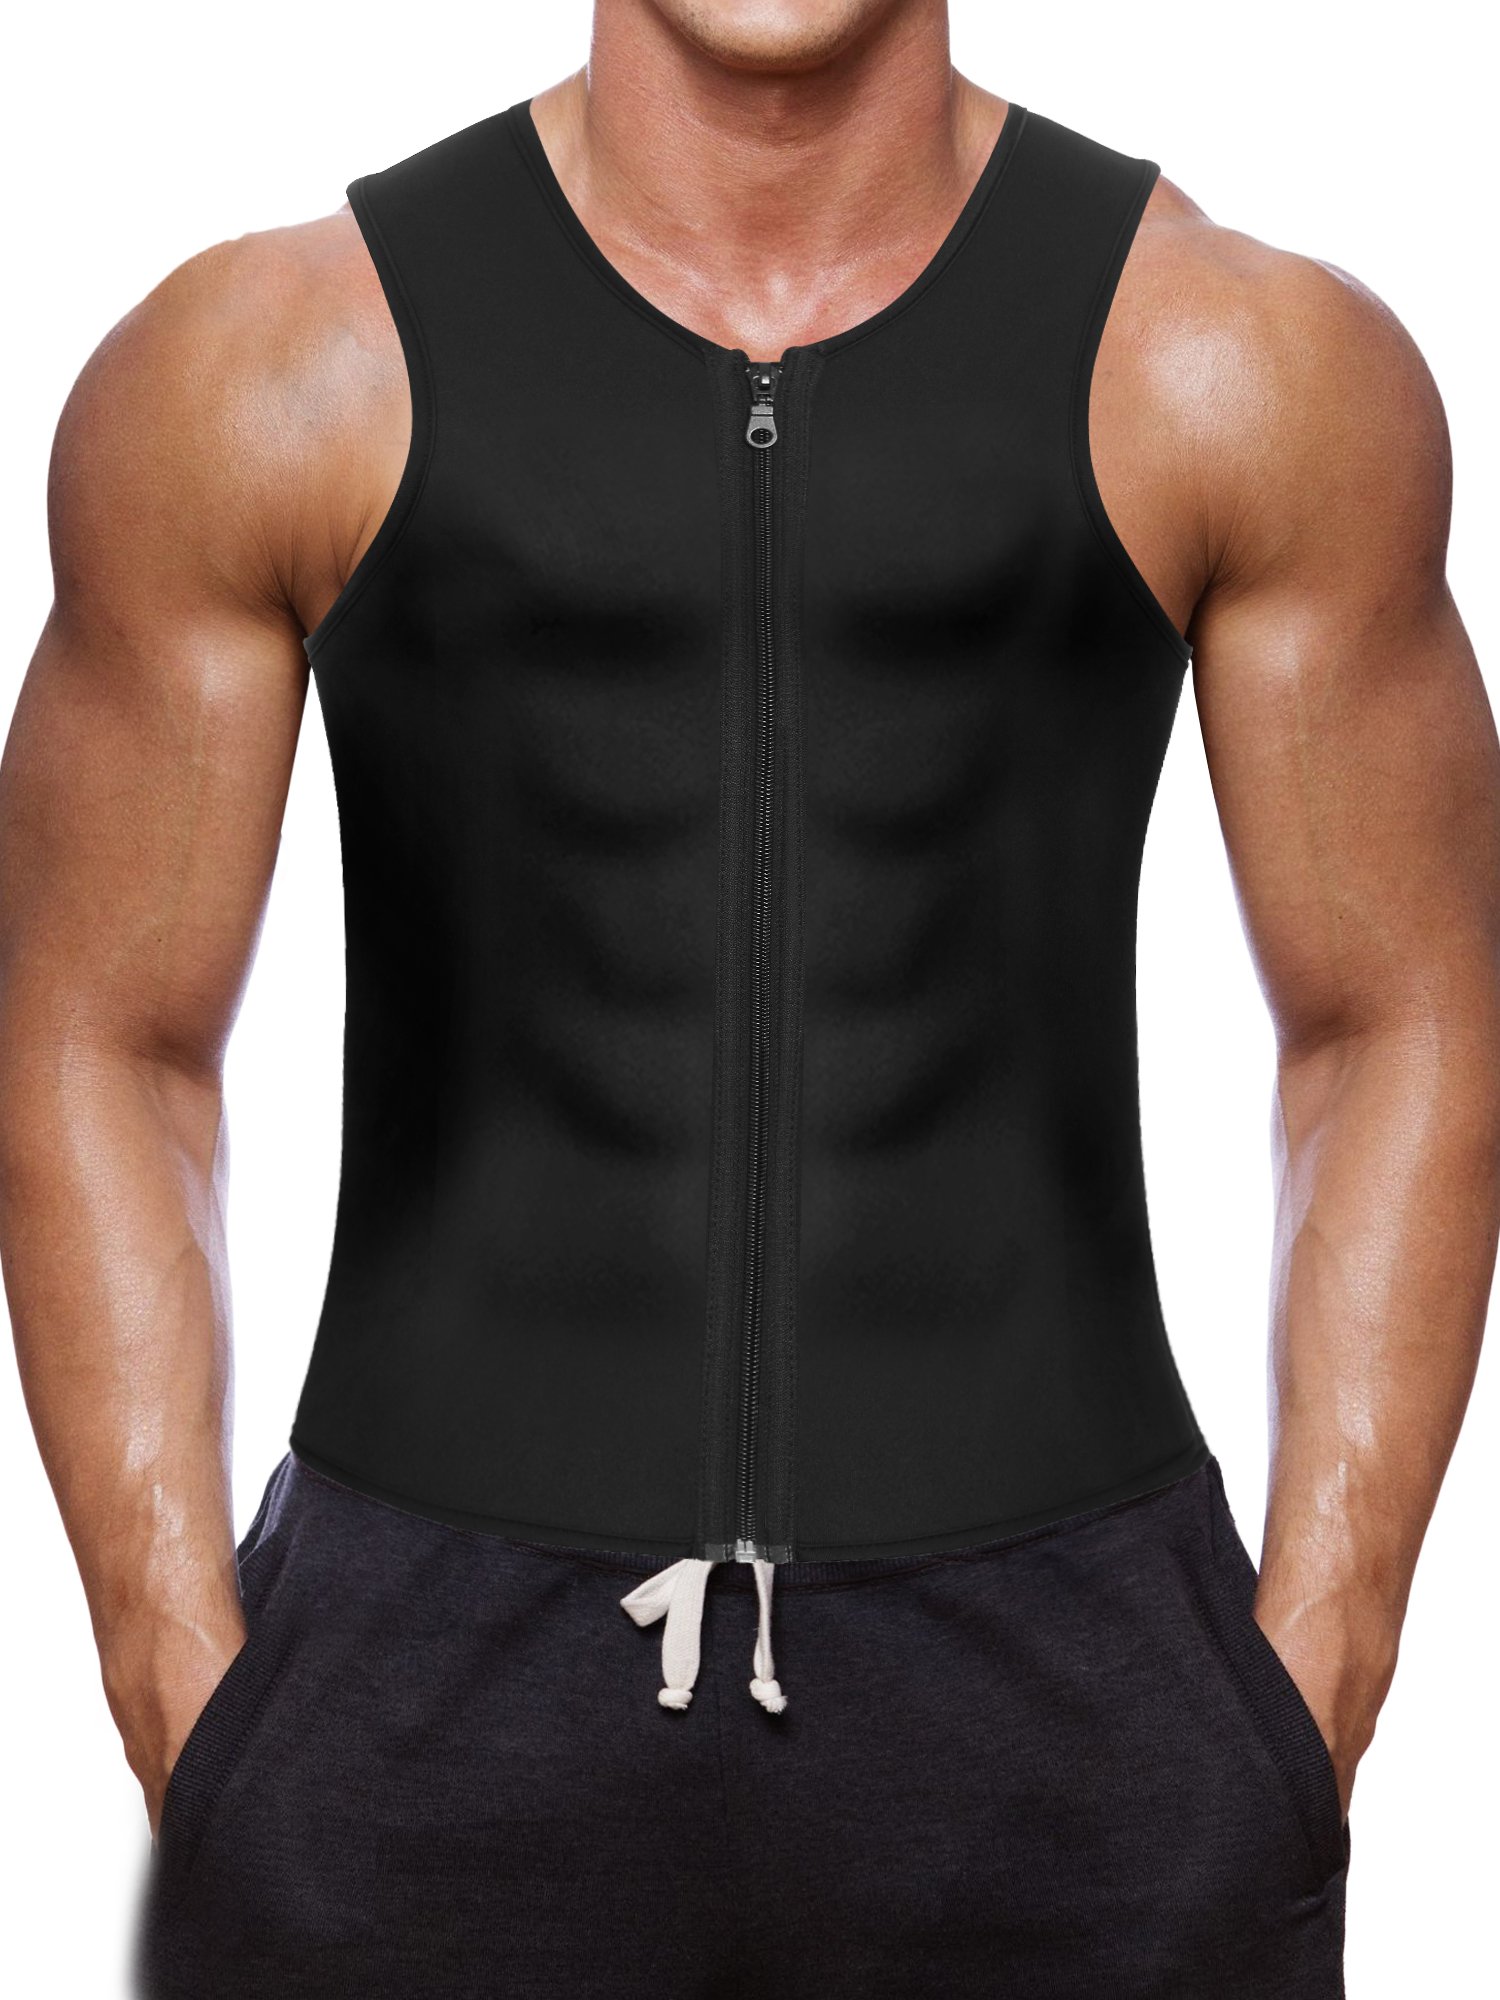 Men Sweat Sauna Vest Body Shaper Top Compression Shirt Workout Fitness  Wearing 